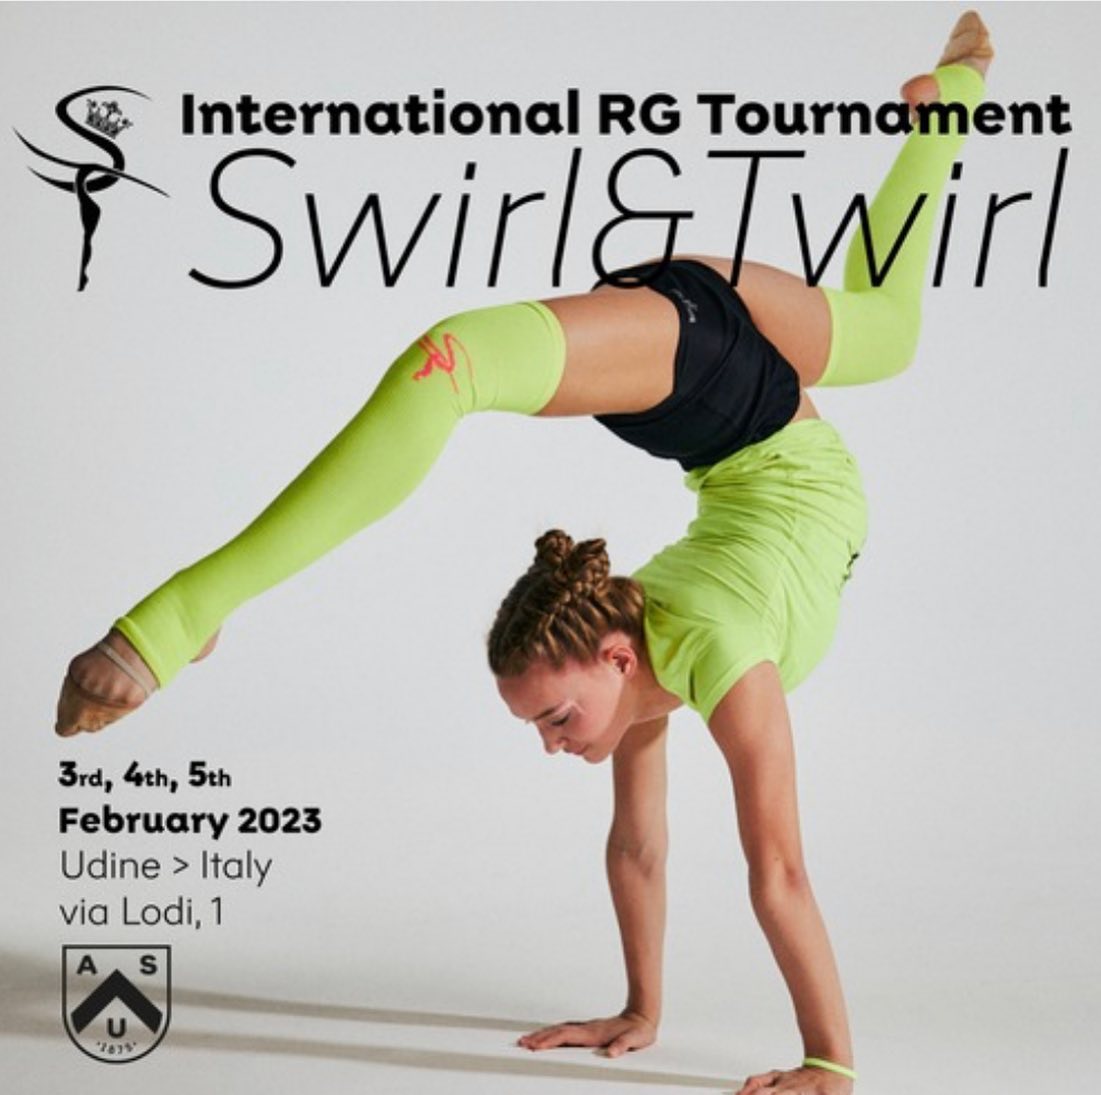 International GR Tournament "Swirl and Twirl"